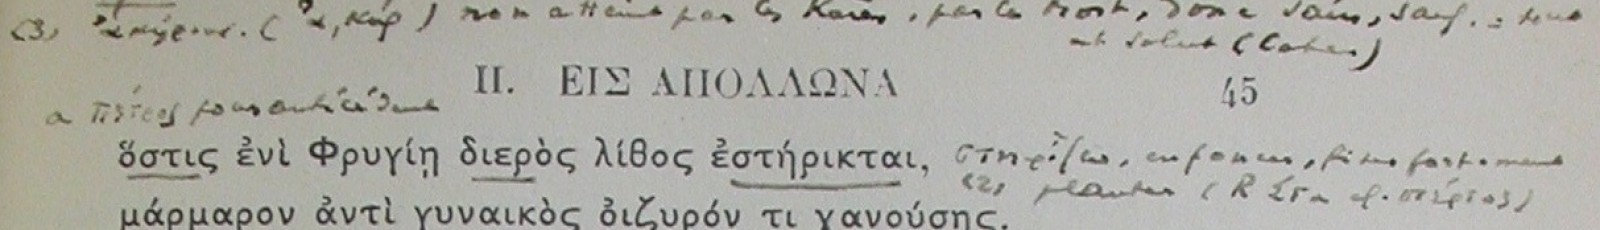 Marginal notes by L. François in "Hymnes" de Callimaque, in "Budé" edition